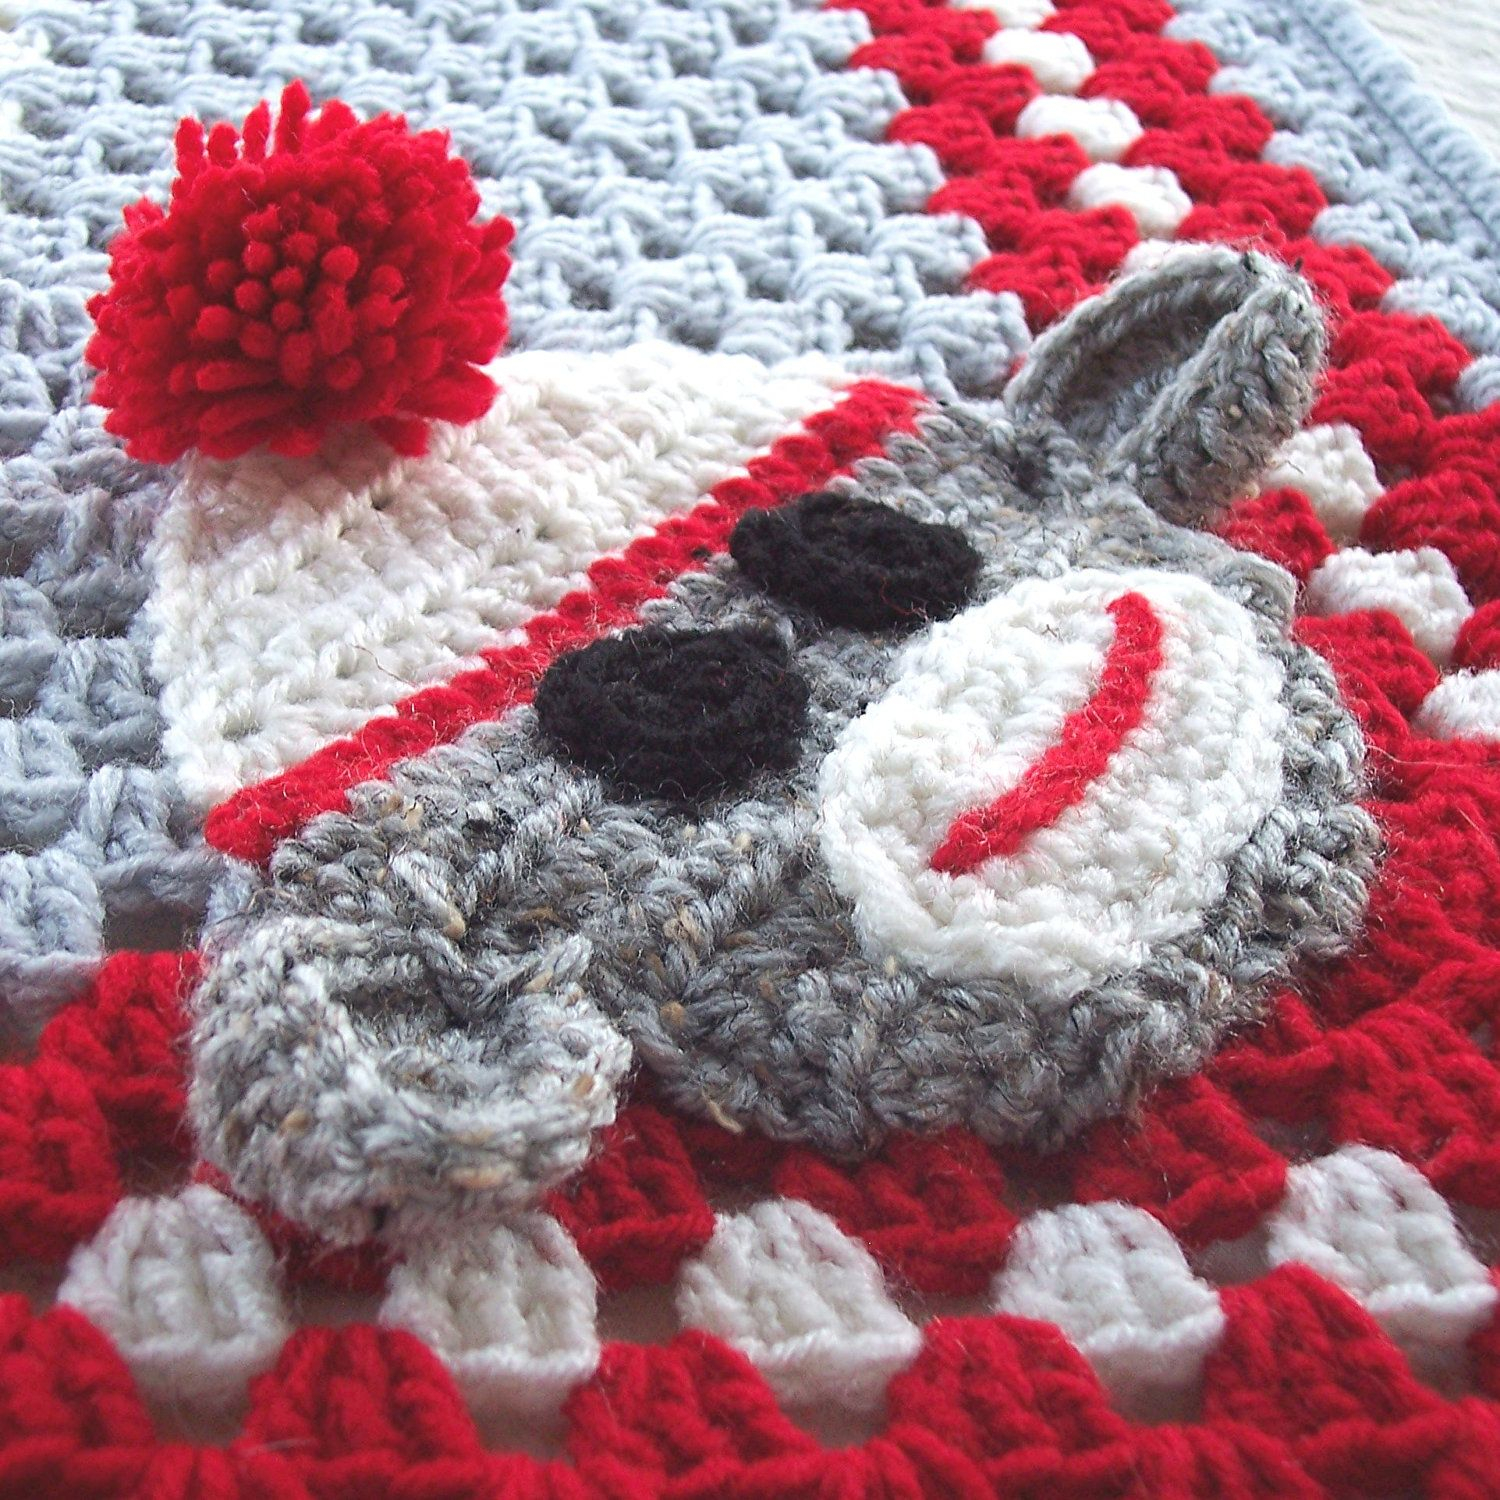 Sock Monkey Afghan Crochet Pattern Free Sock Monkey Granny Square Blanket Red And Gray Crochet Ba